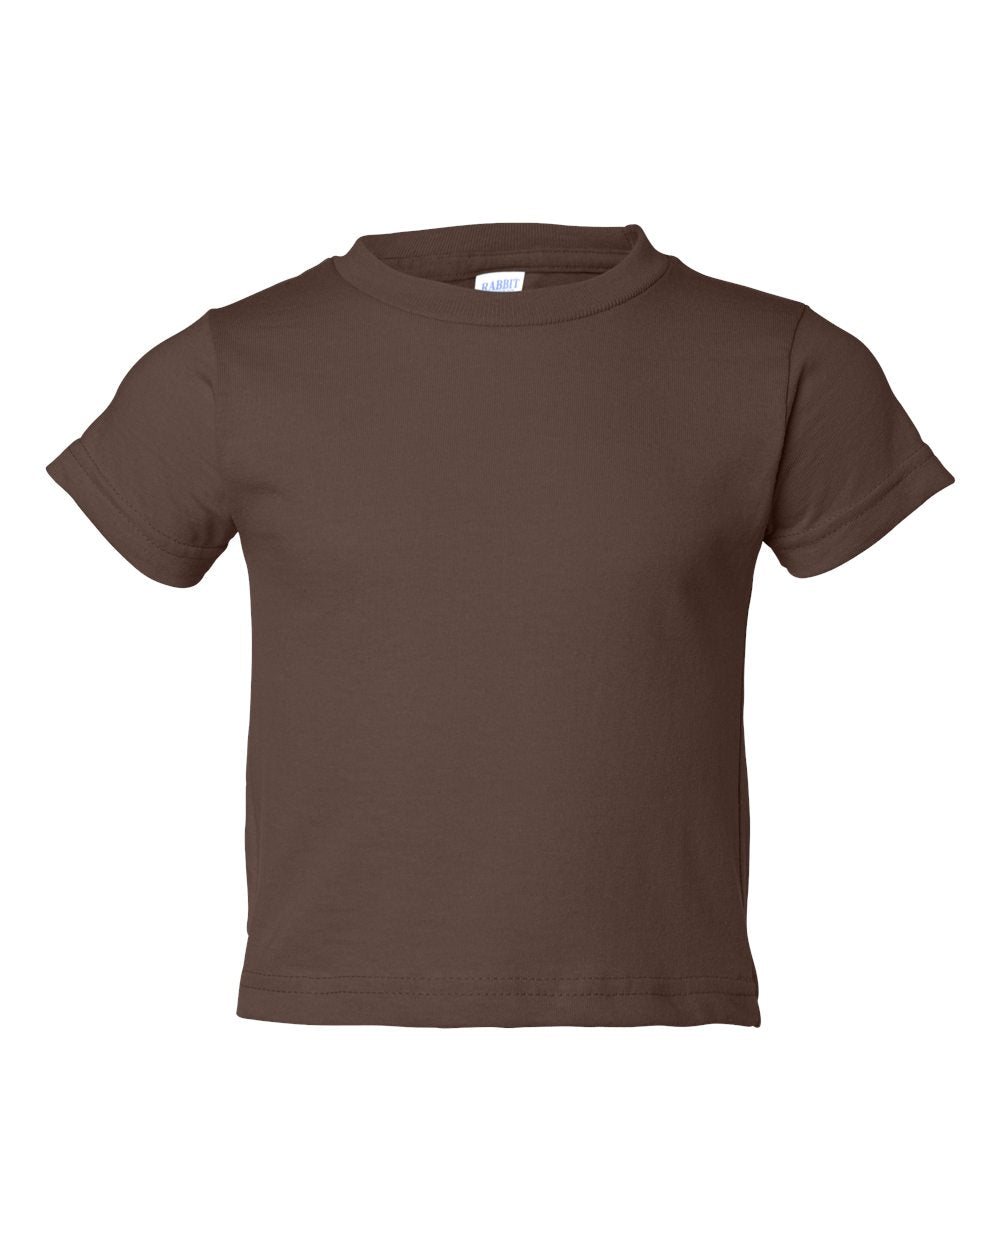 Toddler Jersey T-shirt, 100% Cotton, Brown